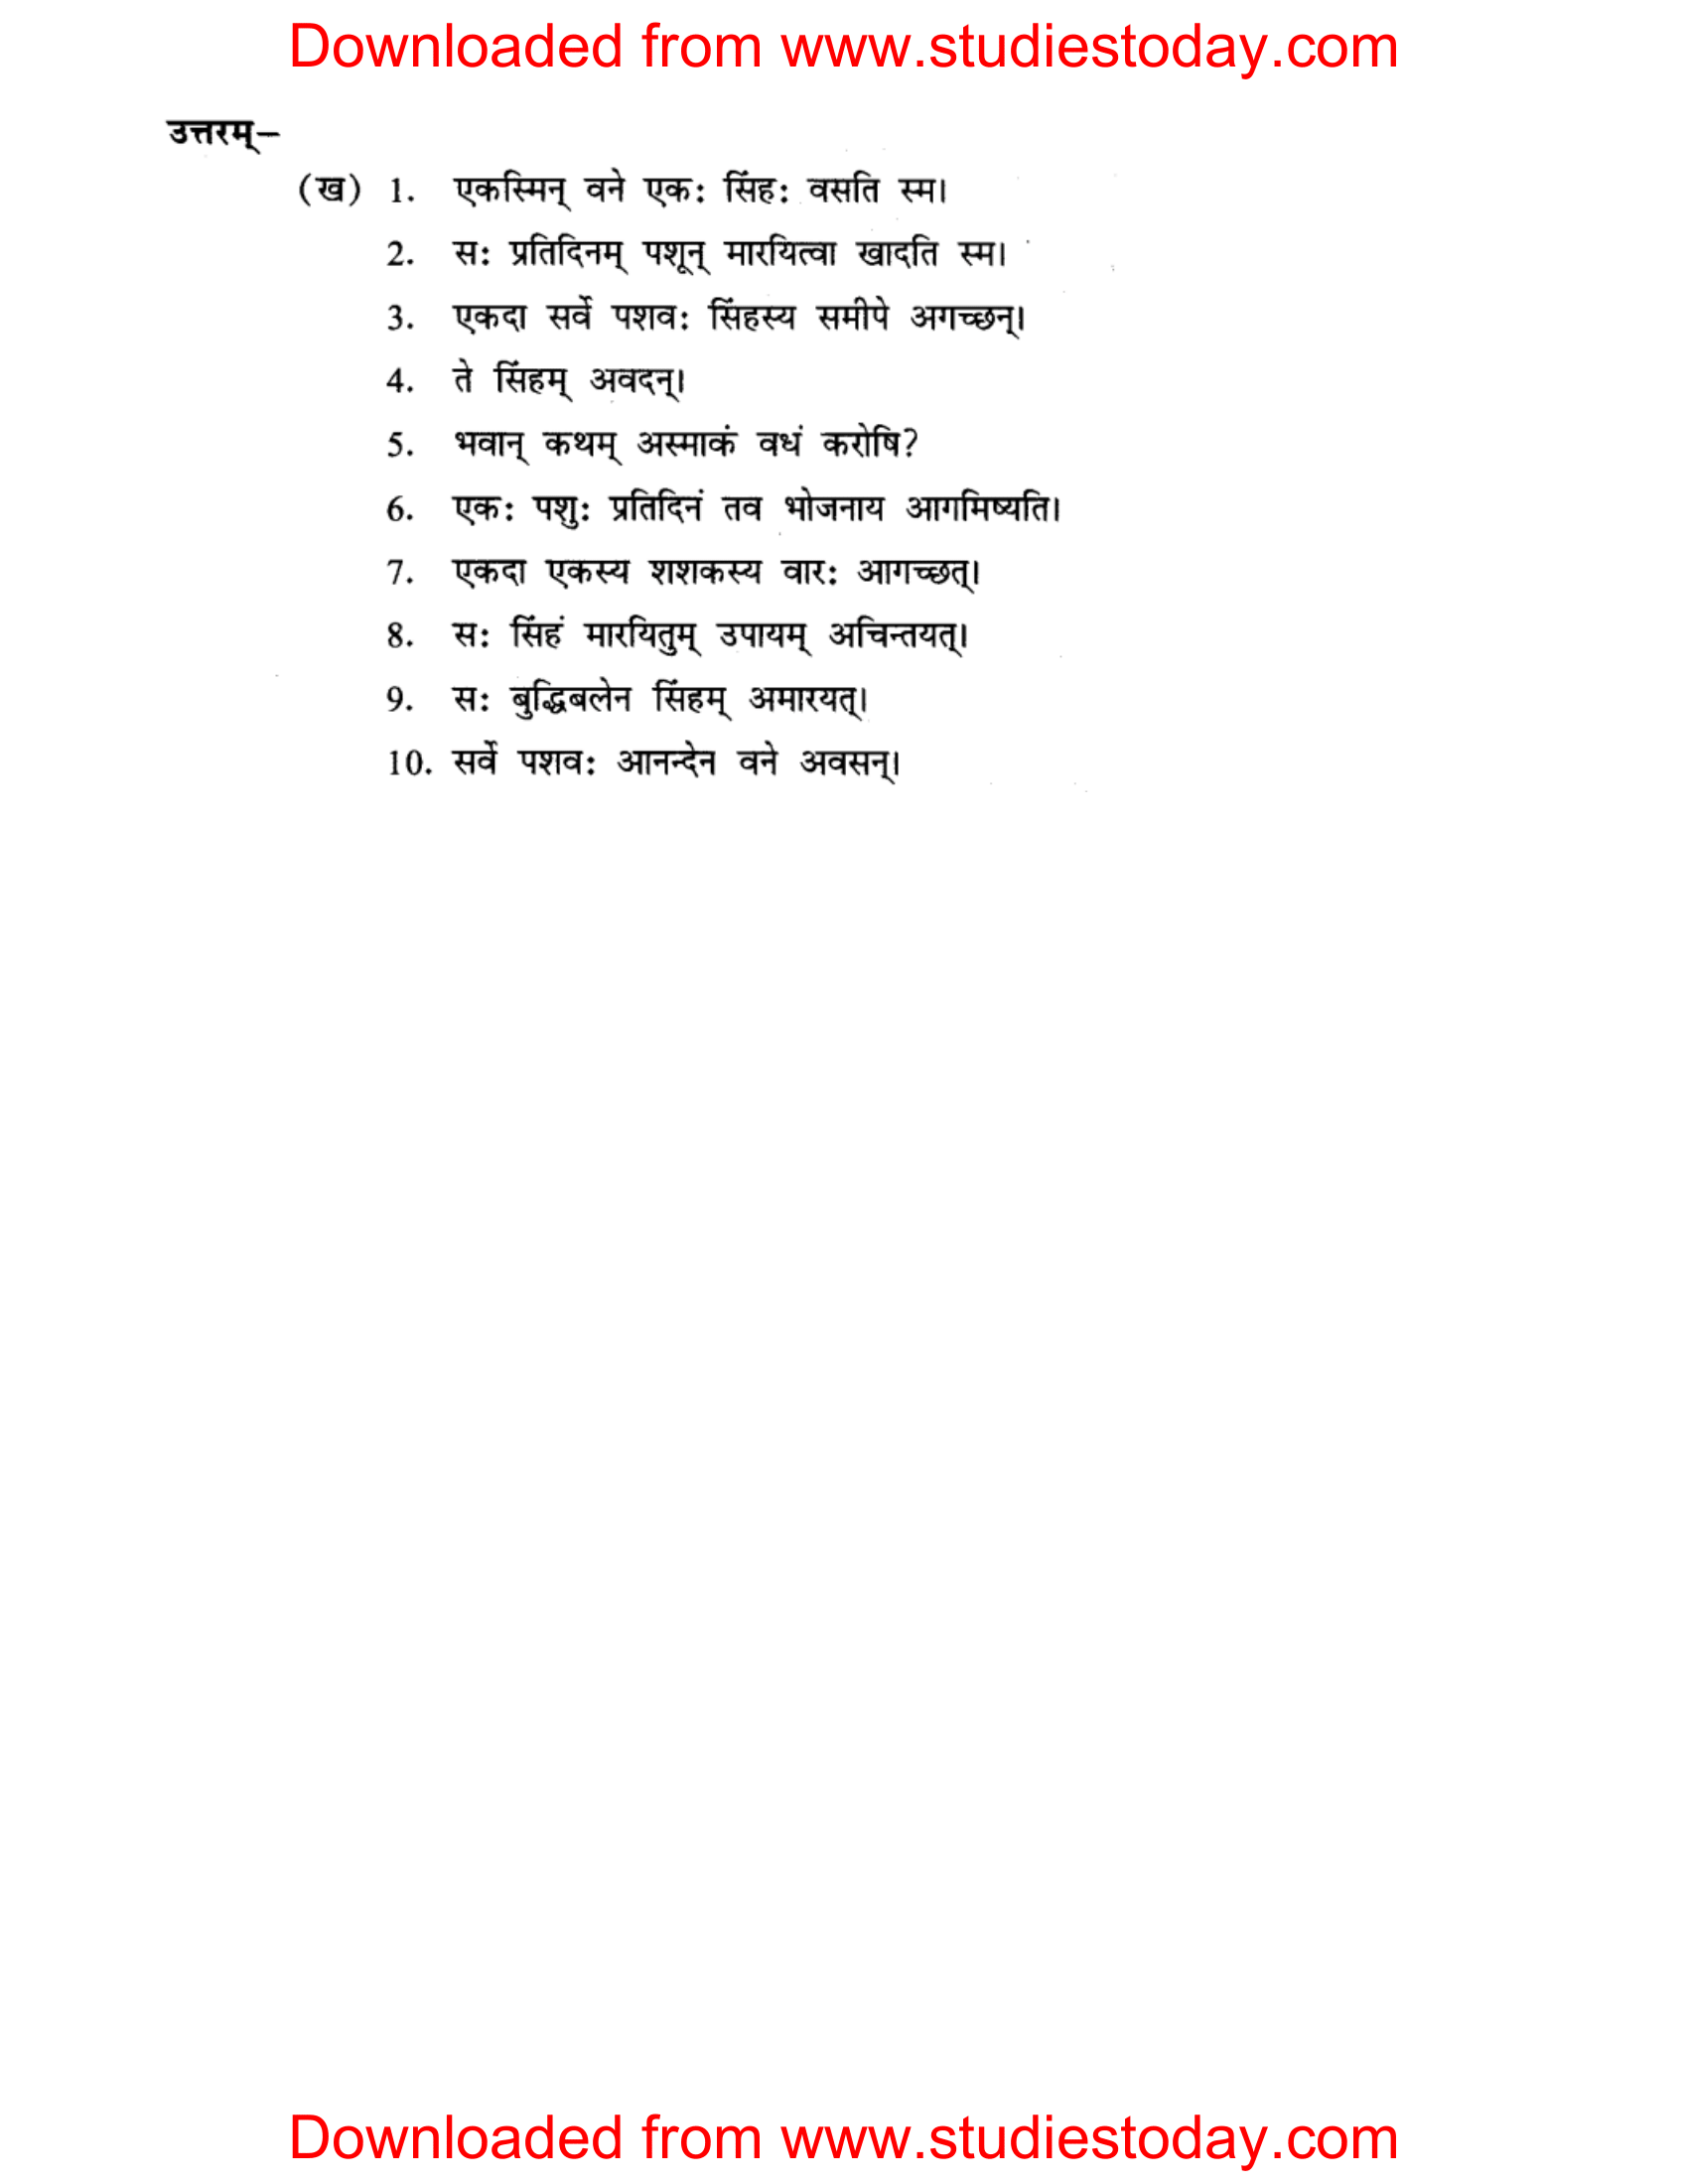 ncert-solutions-class-8-sanskrit-chapter-8-anuvad-abhyas-3